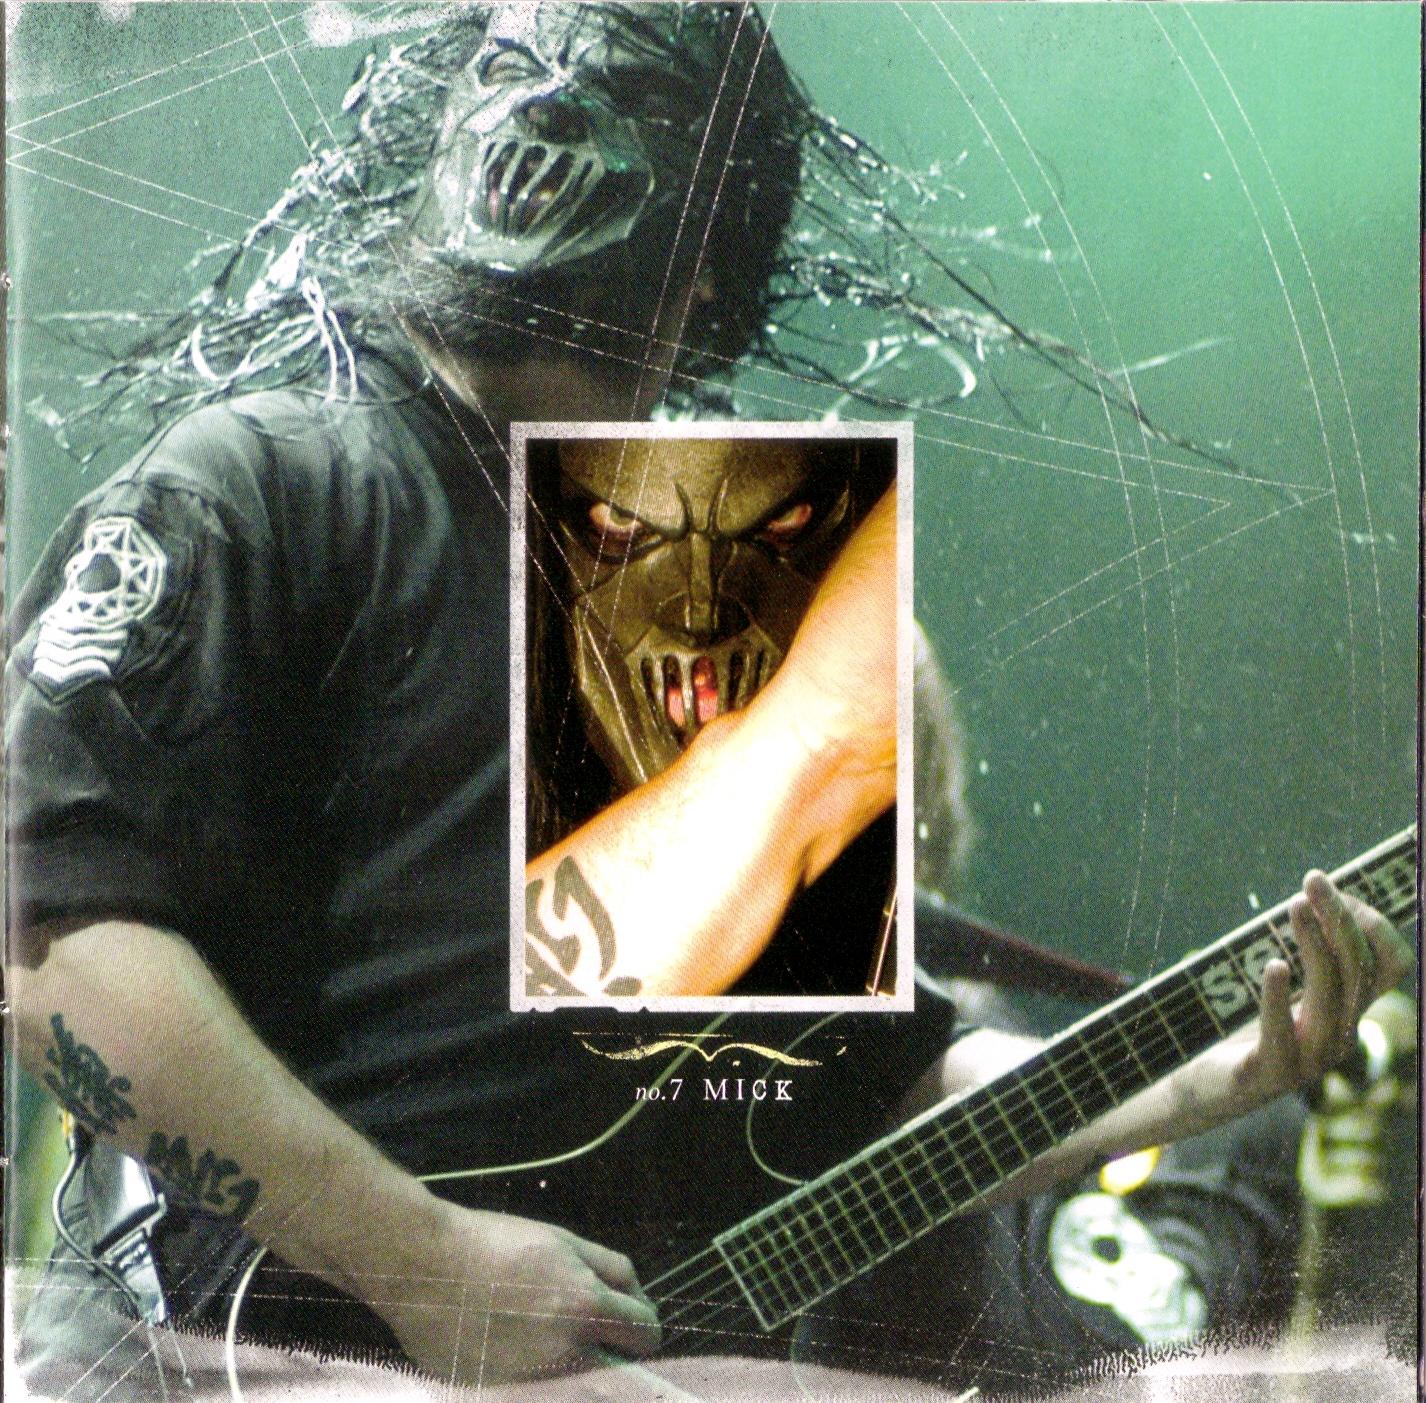 9 0 live. Slipknot 9.0 Live. Slipknot 9.0 Live обложка. Slipknot 9.0. Live CD. Slipknot - 9.0: Live [cd2] (2005).